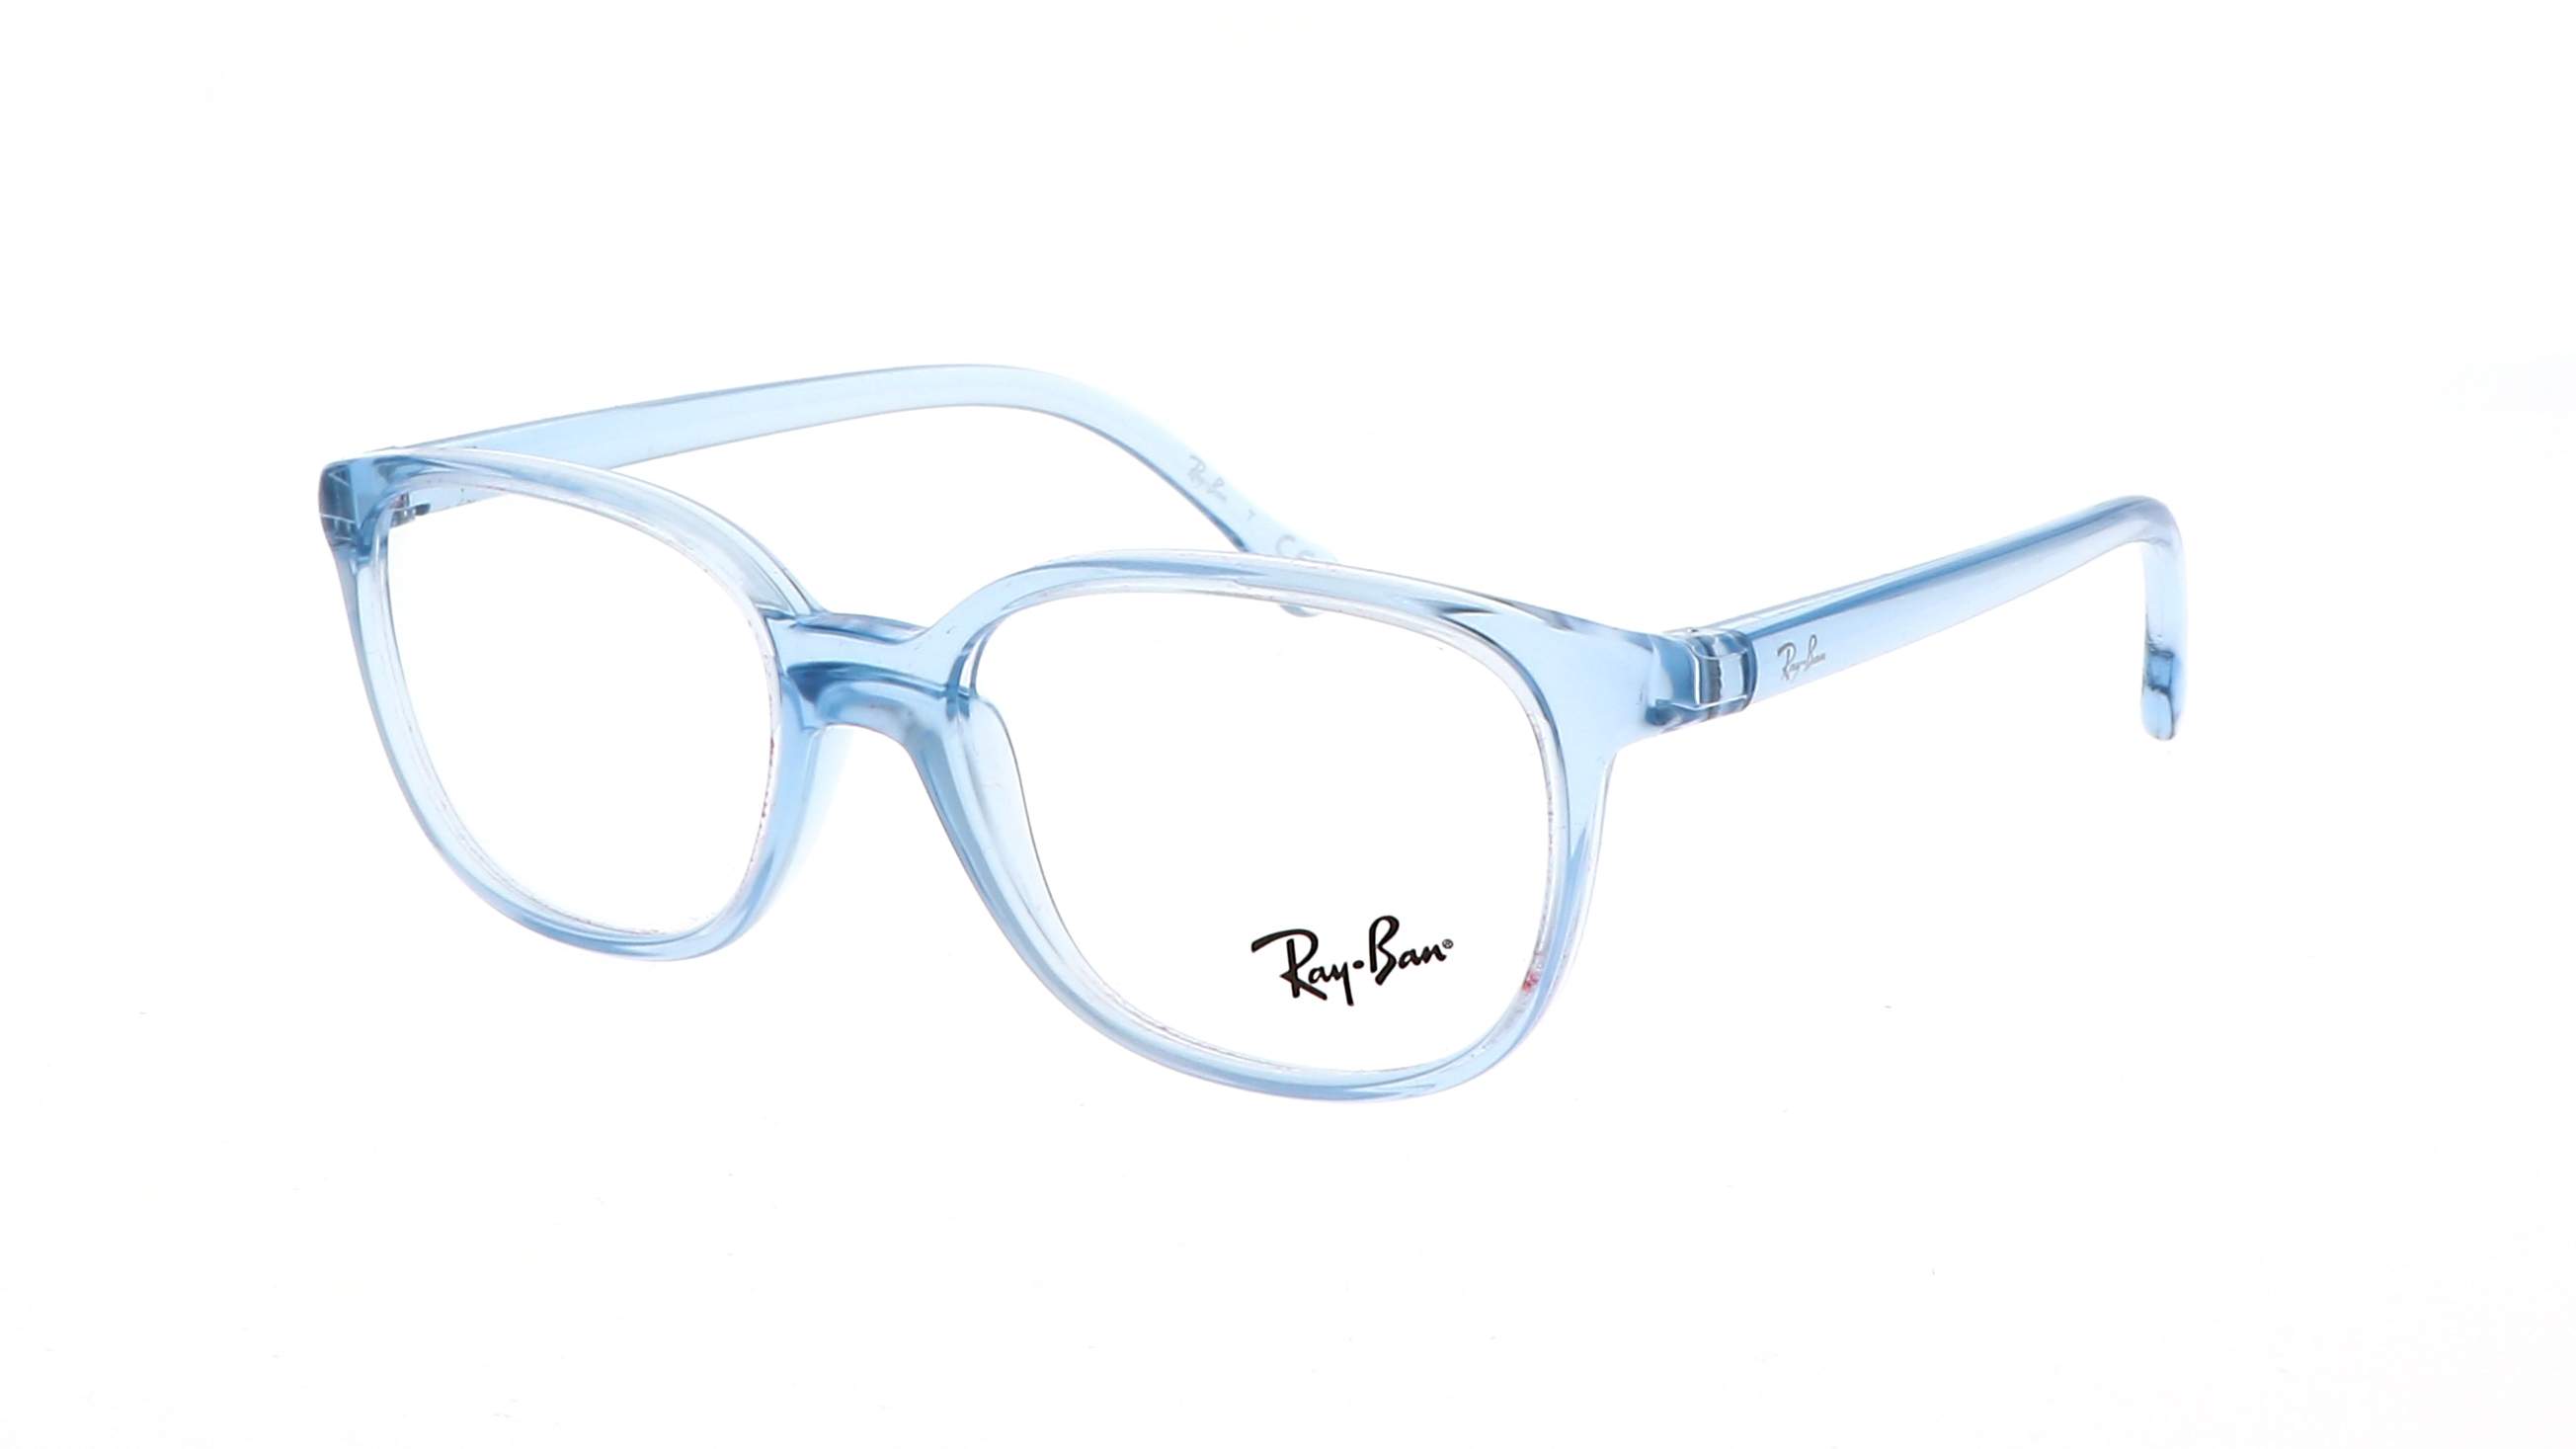 blue ray ban eyeglasses